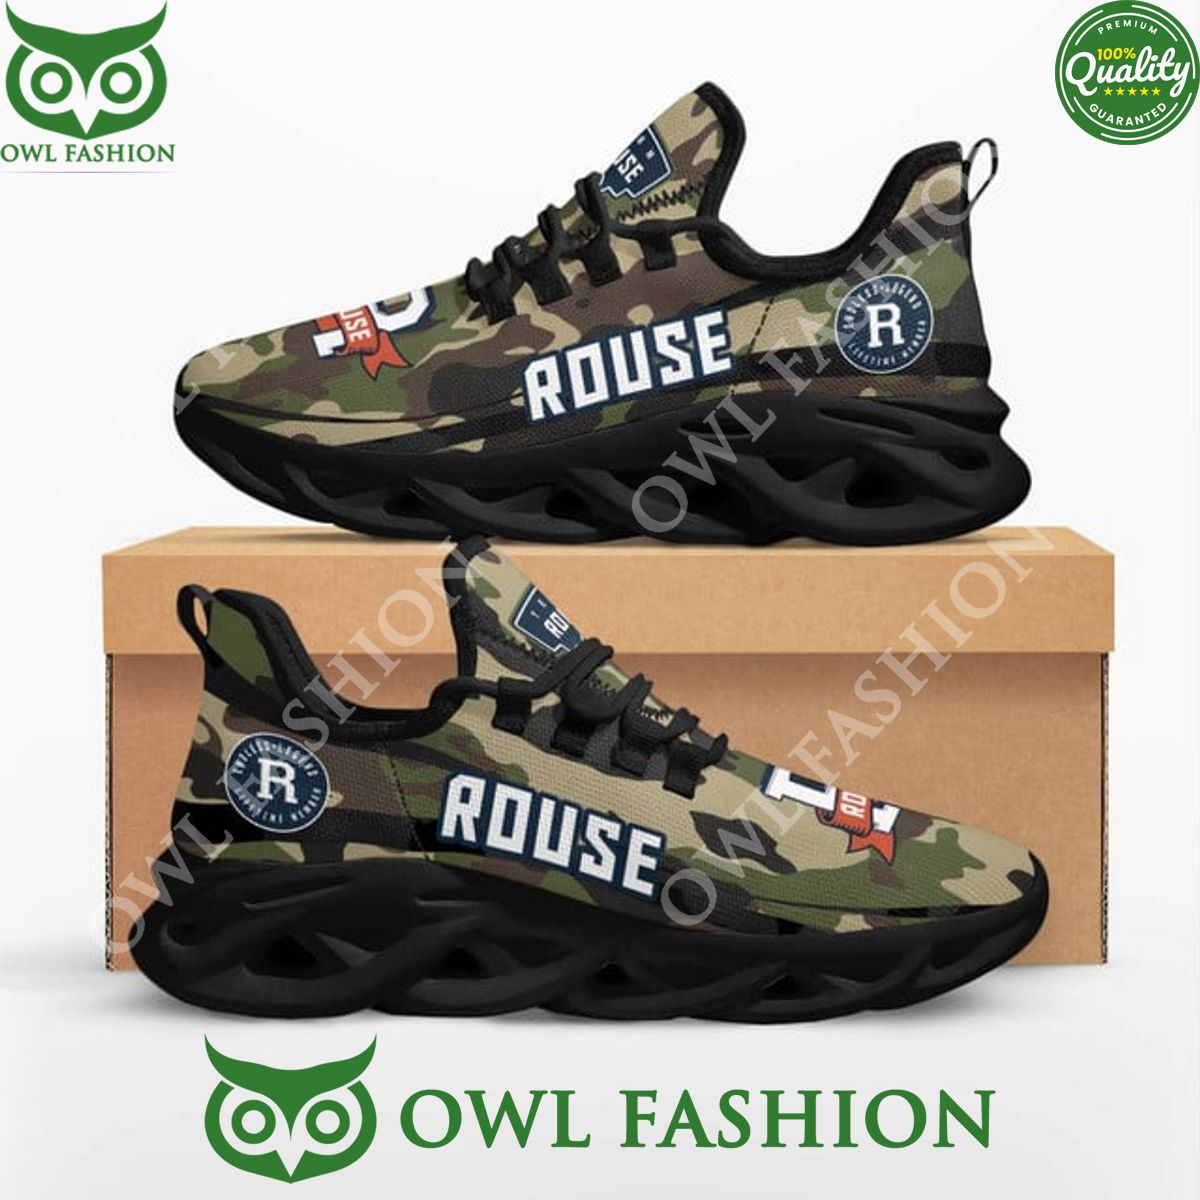 rouse logo endless legend camouflage veterans max soul shoes 1 HLMZz.jpg